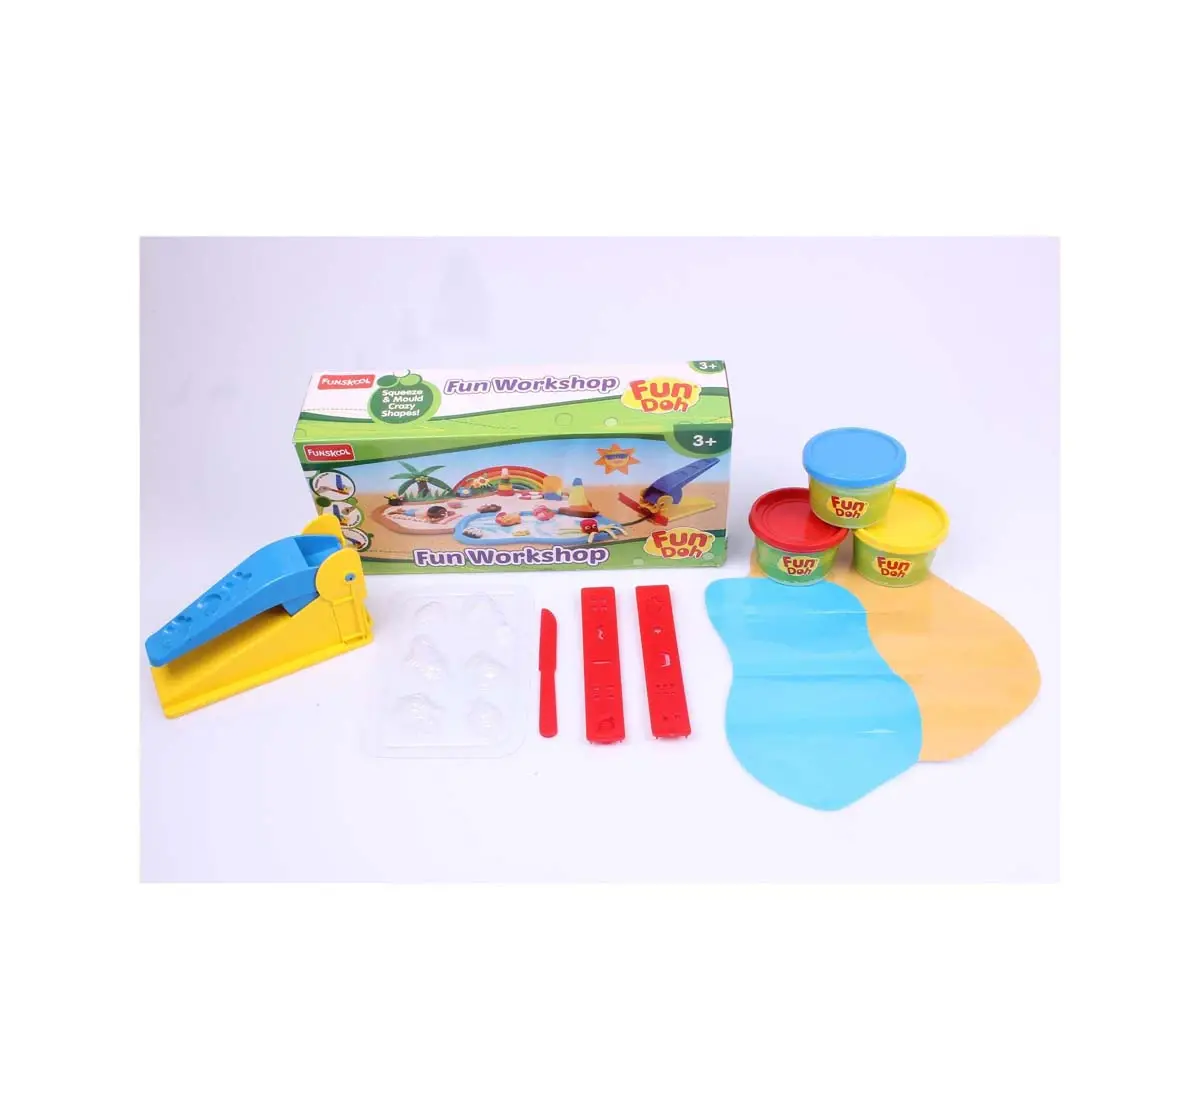 Fun Dough Fun Workshop - Multi Color Clay & Dough for Kids Age 3Y+